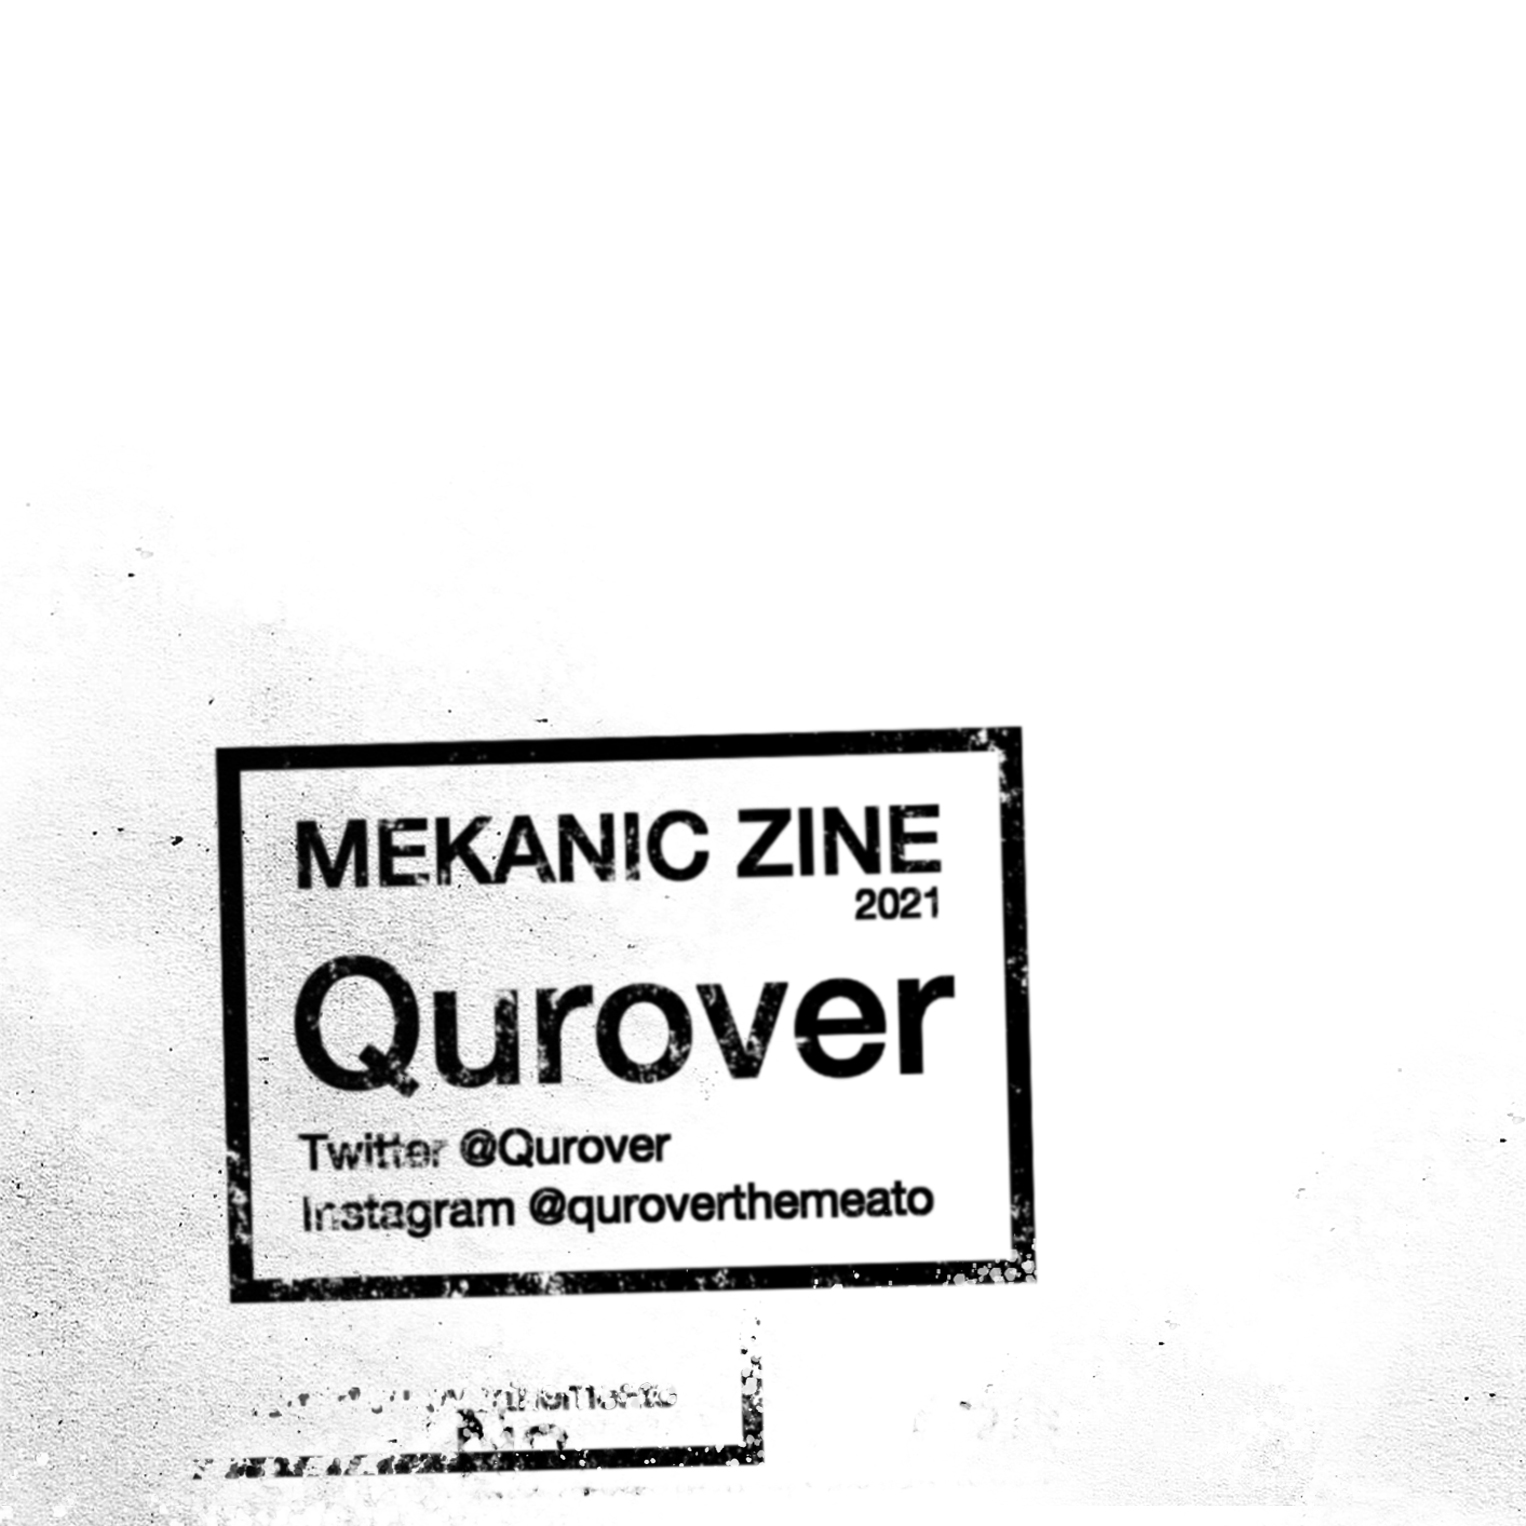 「MEKANIC ZINE／Qurover」の進捗状況について